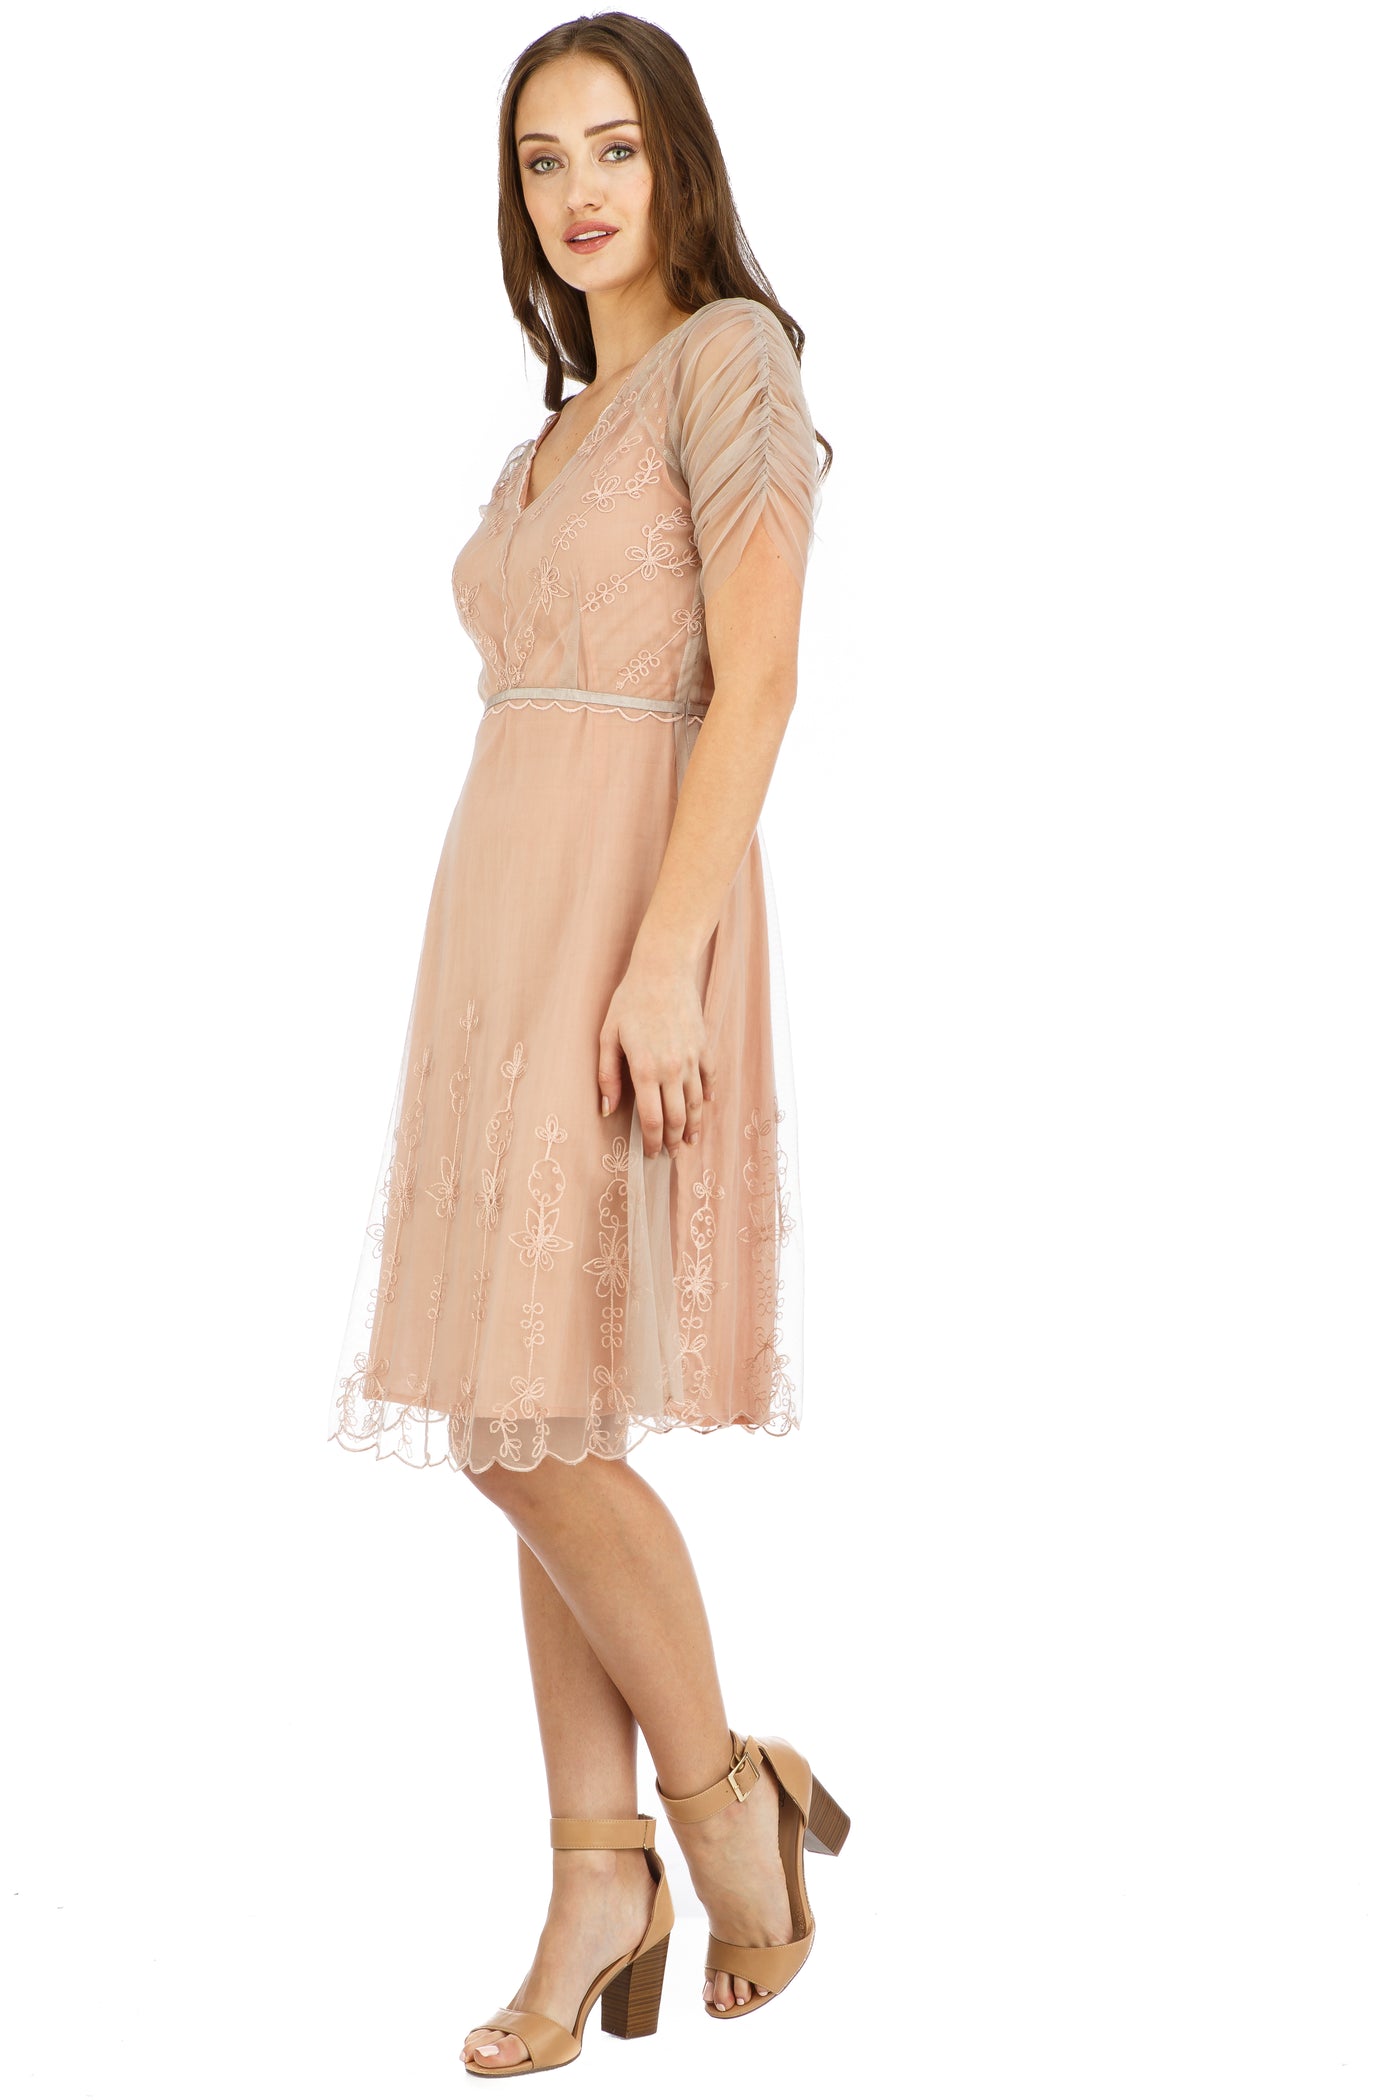 Nataya Scarlet AL-251 Quartz Dress